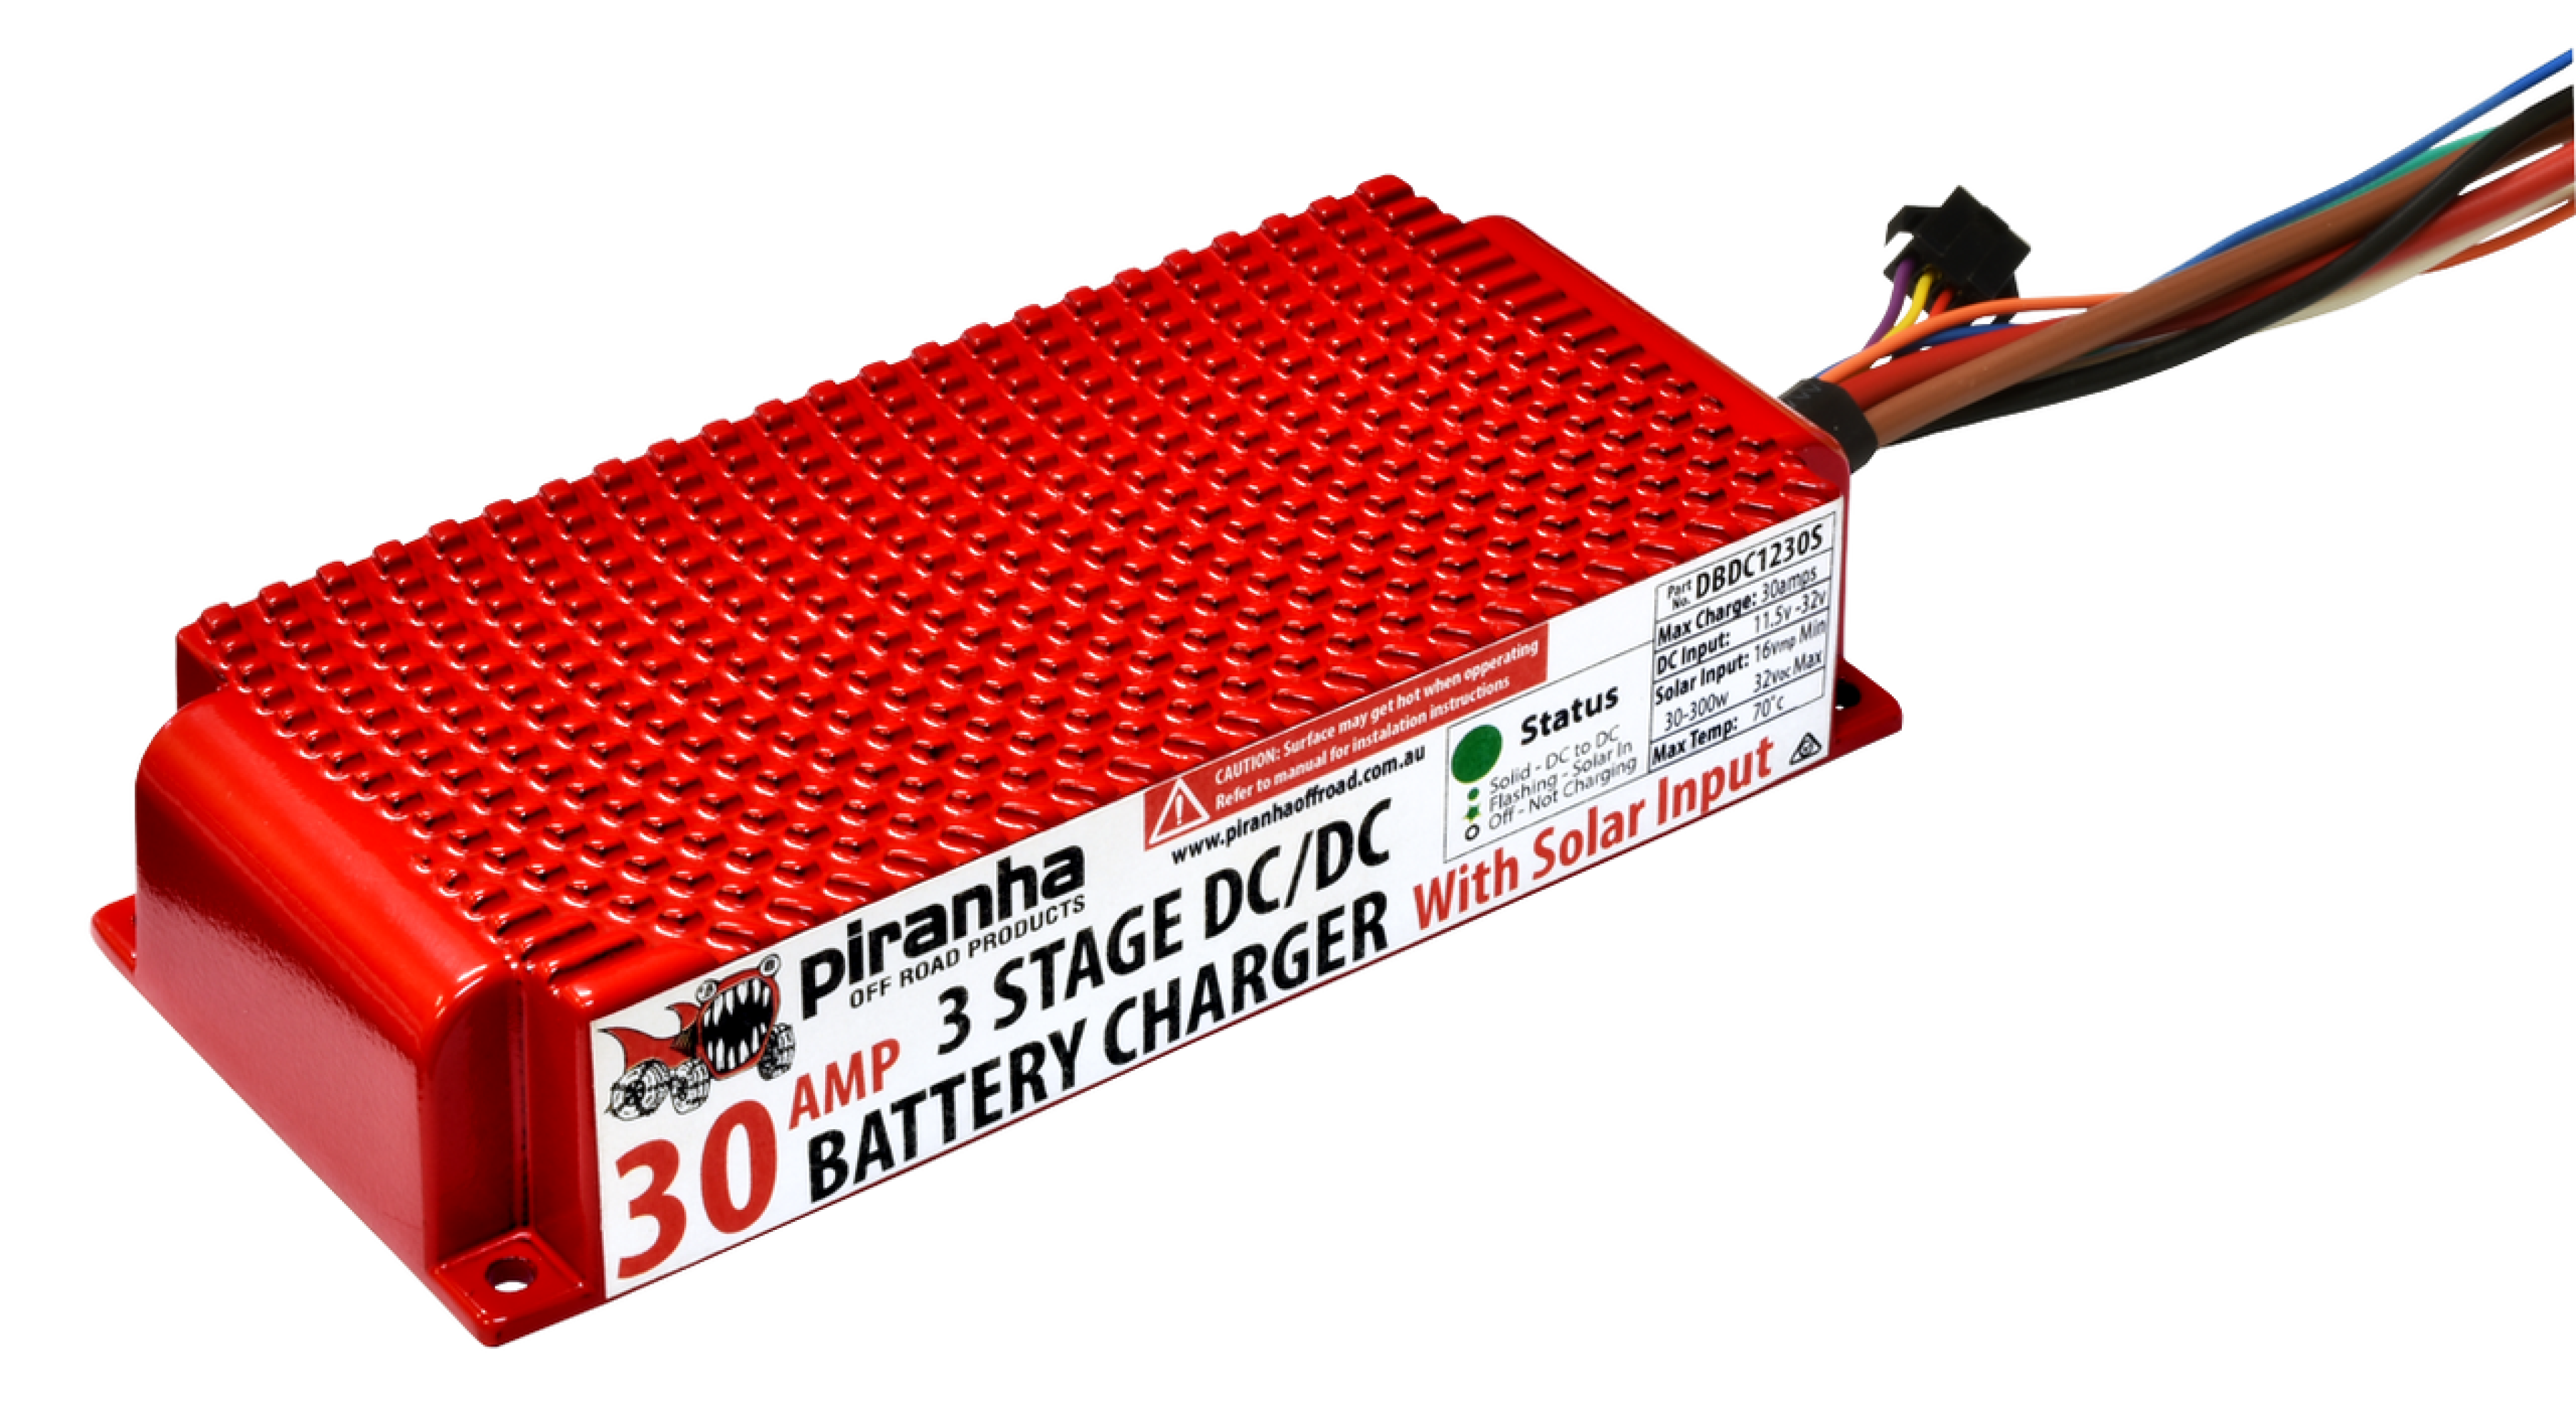 f26211ce/hilux bg piranha battery png